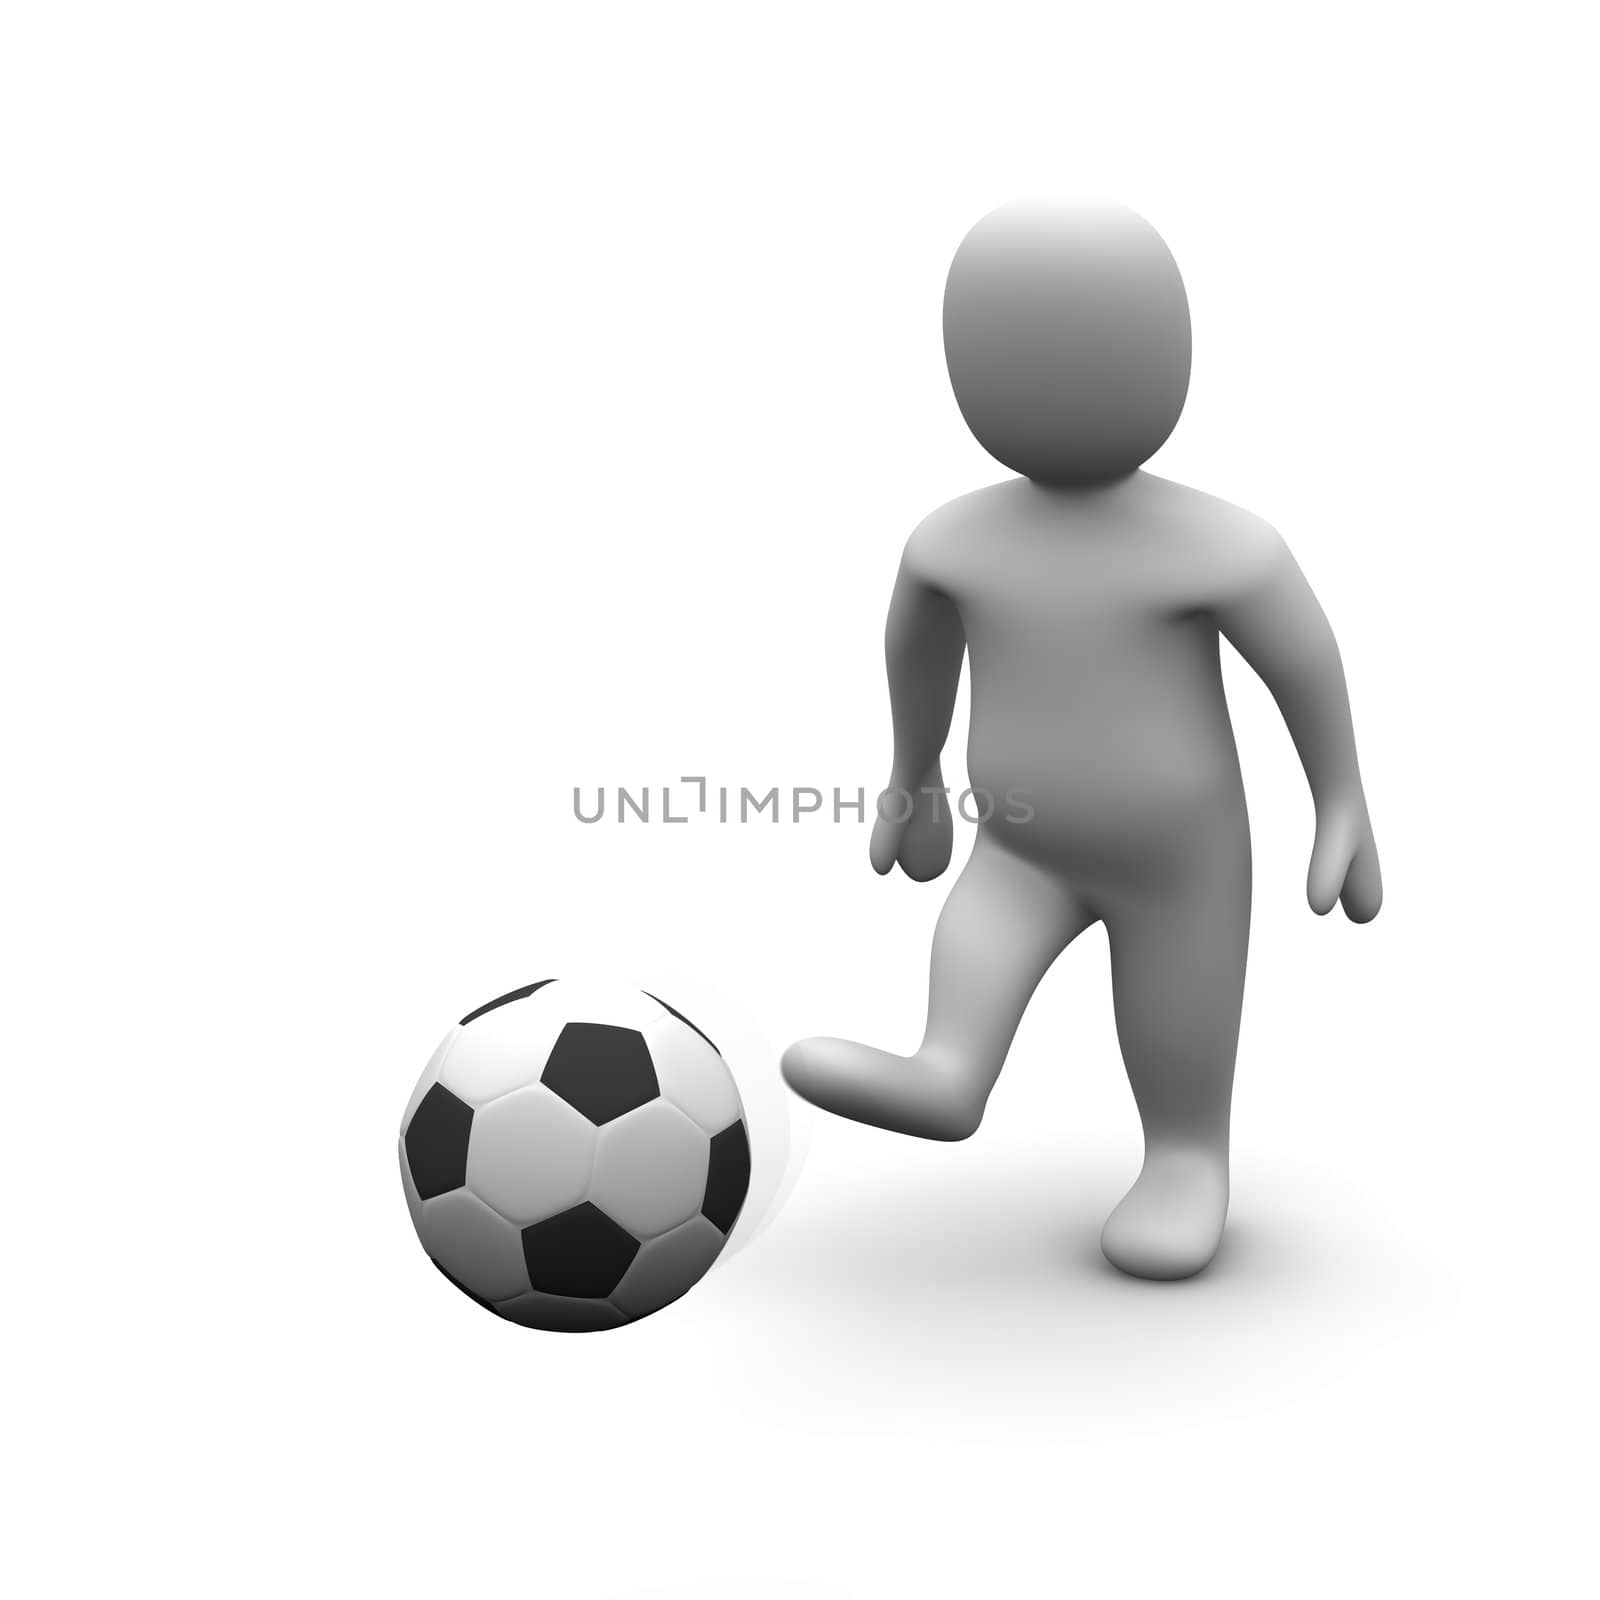 Human kicking football. 3d rendered illustration.